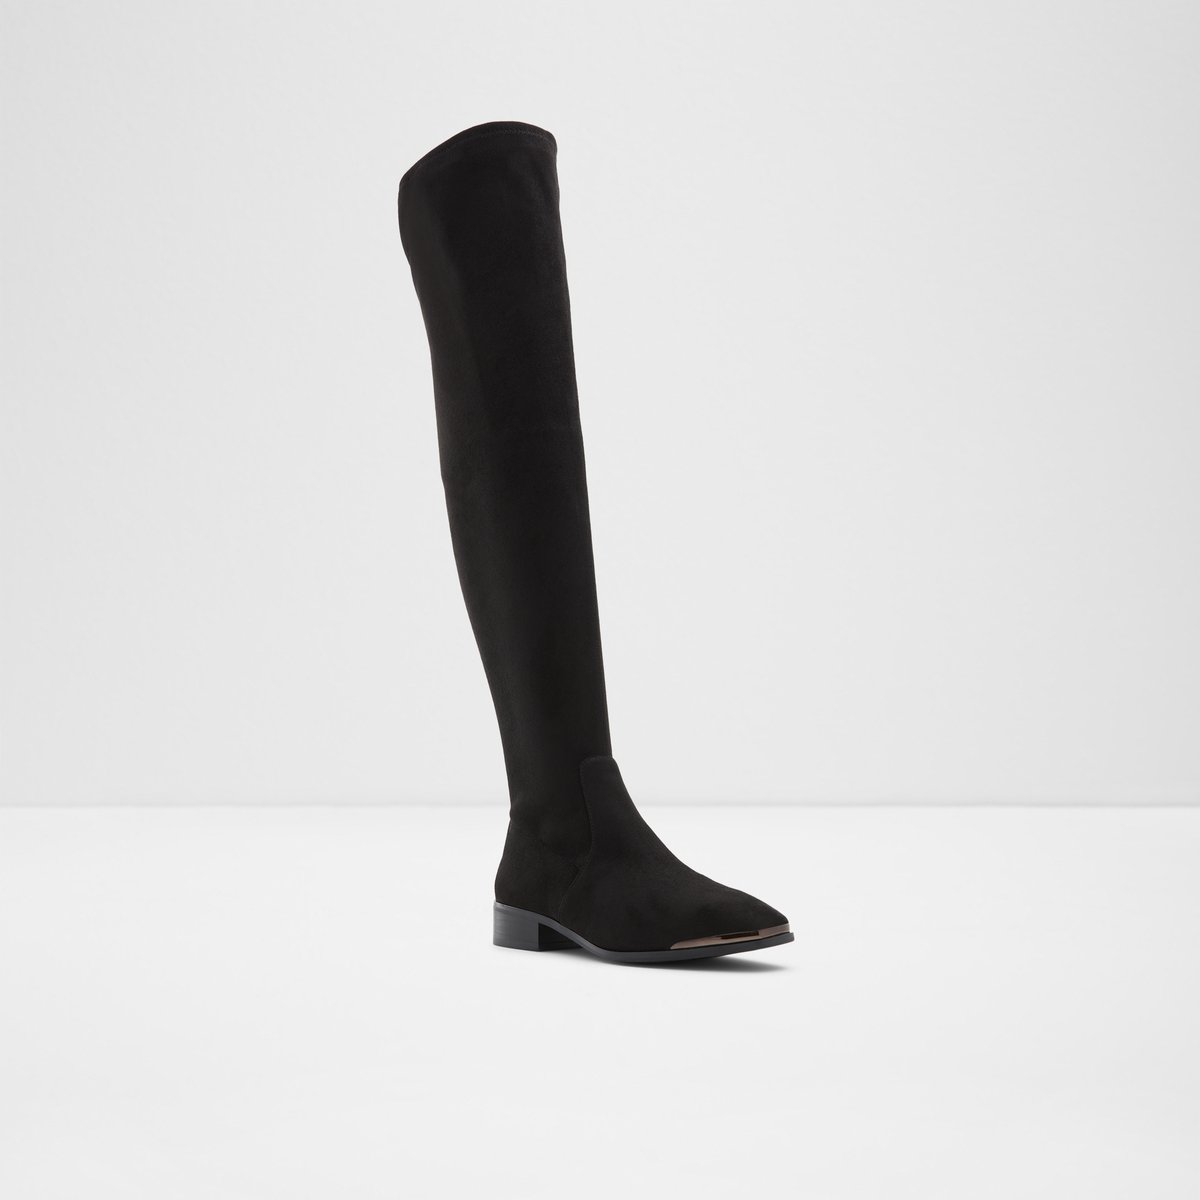 Sevaunna Black Textile Women's Casual boots